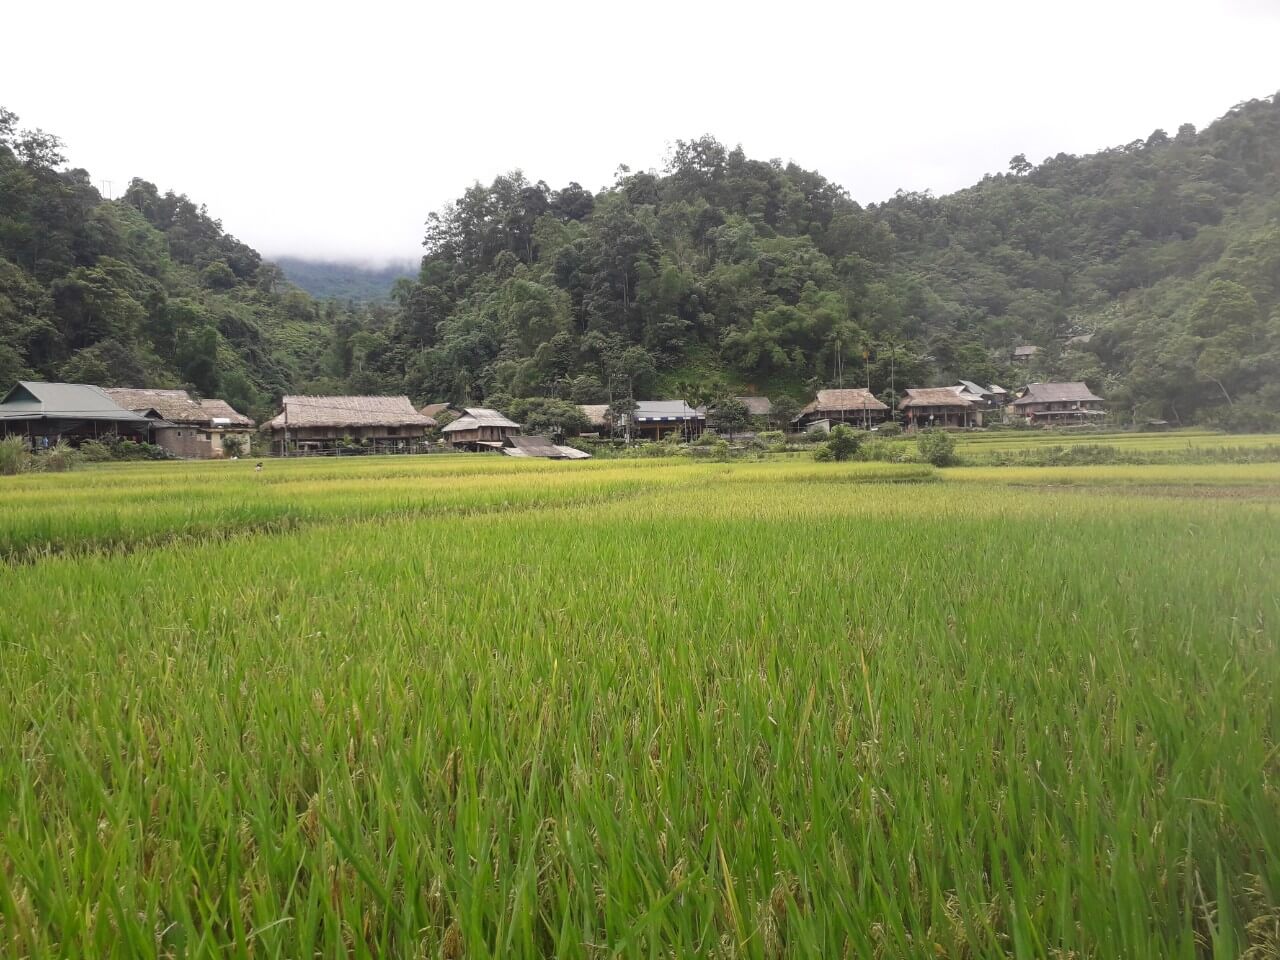 Kho Muong rice fields